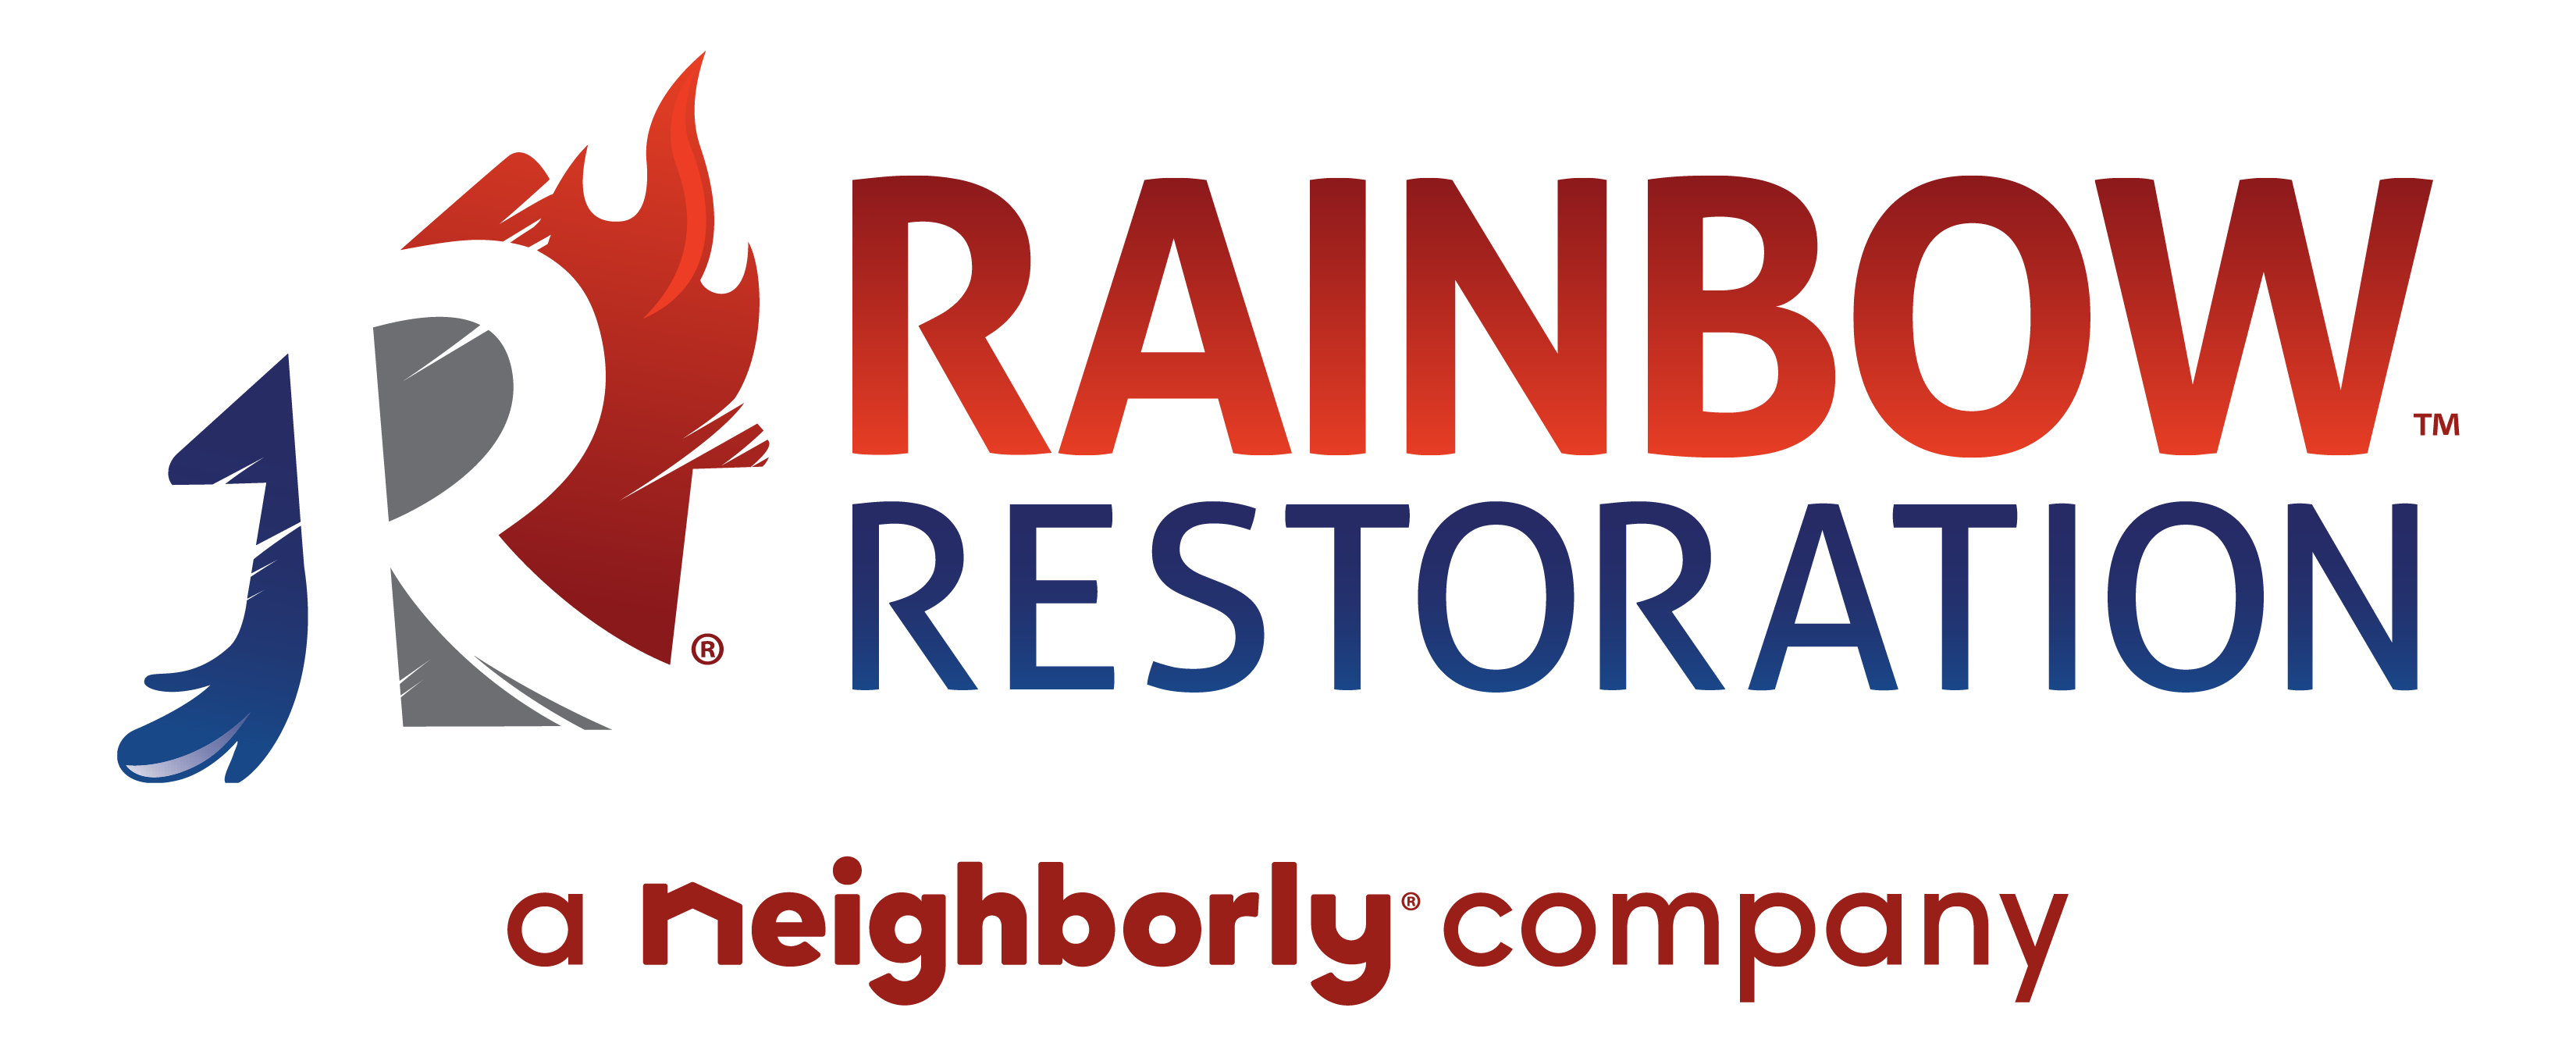 Rainbow Restoration a neighborly company